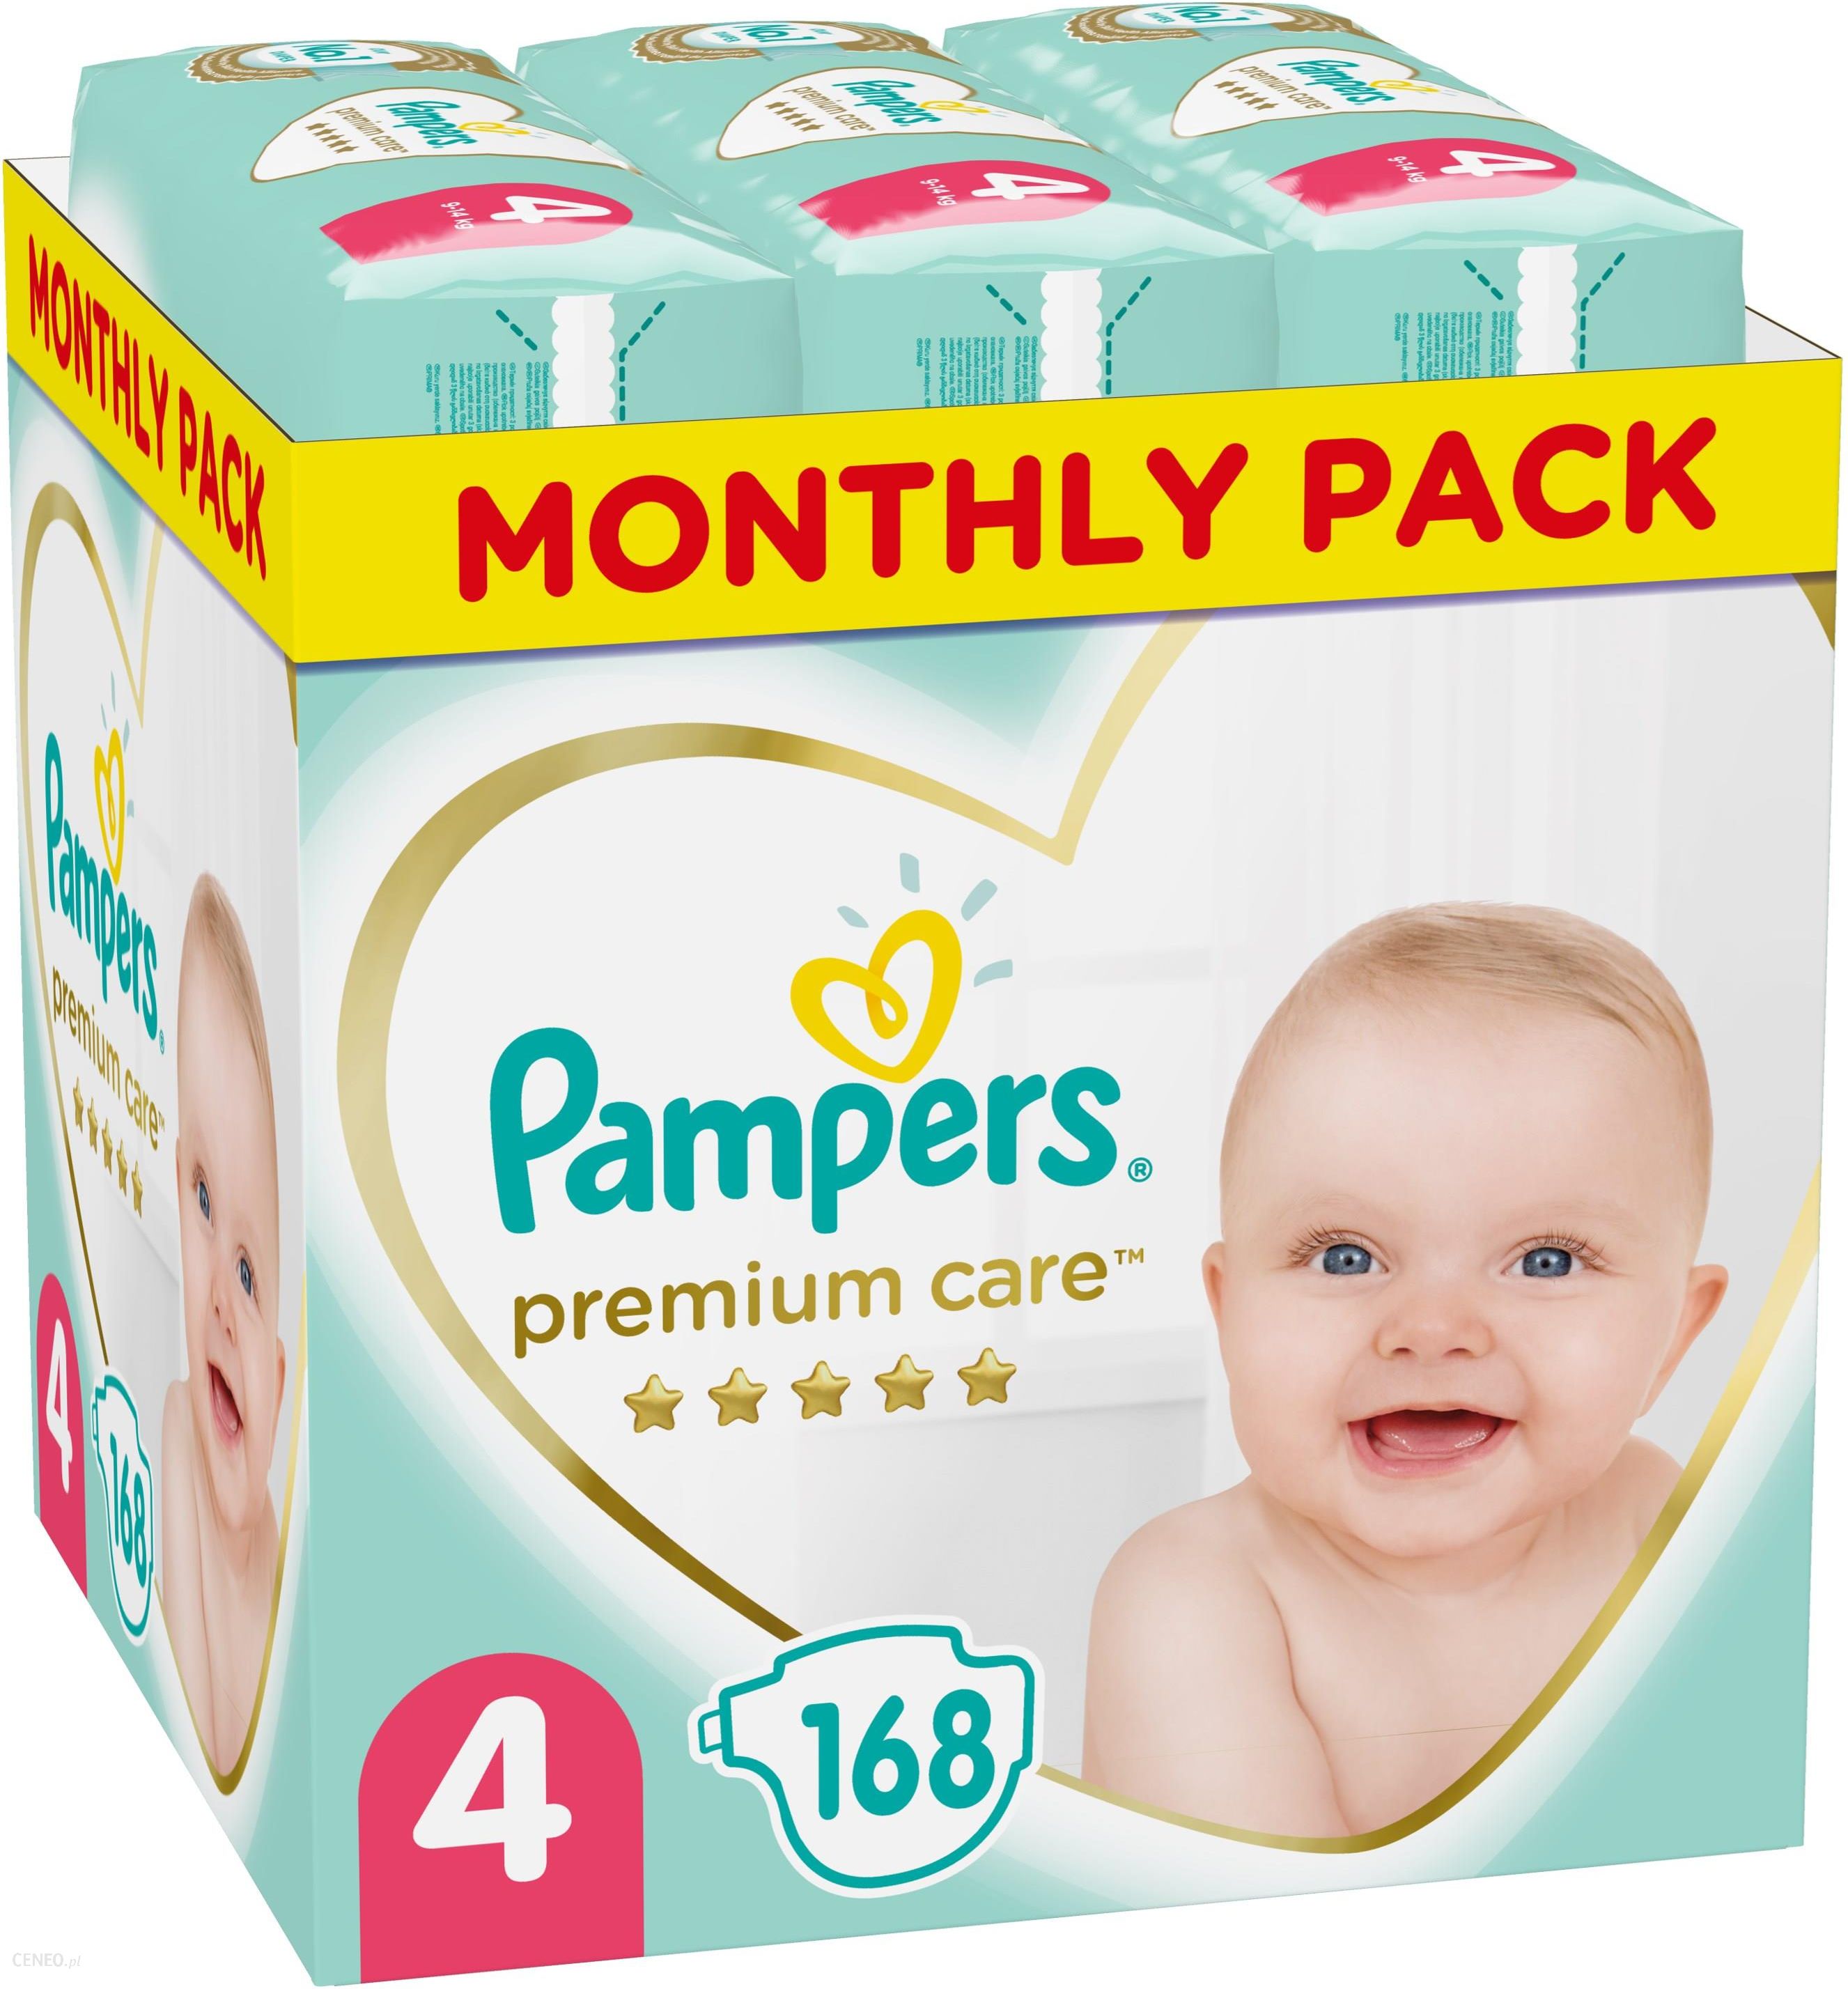 pampers premium care newborn 2-5kg 88 ks